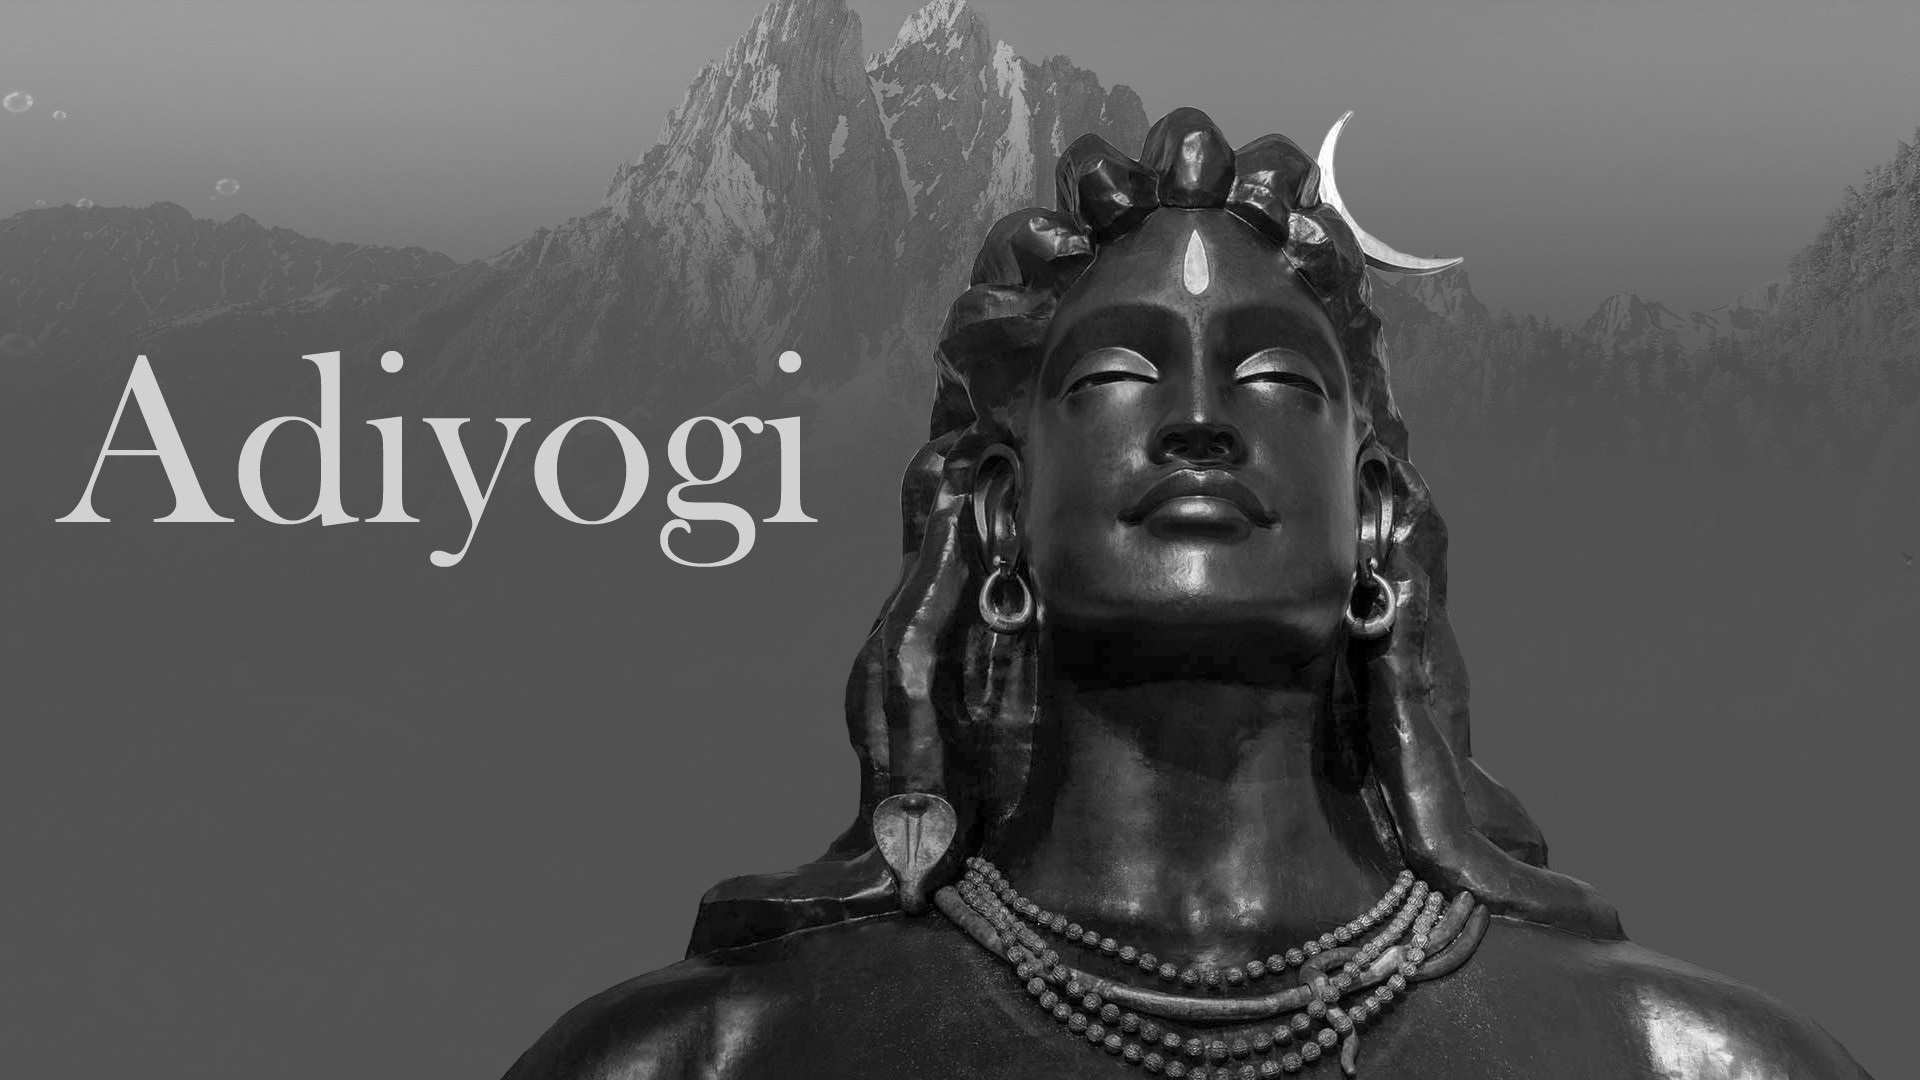 Adiyogi Shiva Wallpaper - Adiyogi The Source Of Yoga - 1920x1080 Wallpaper  